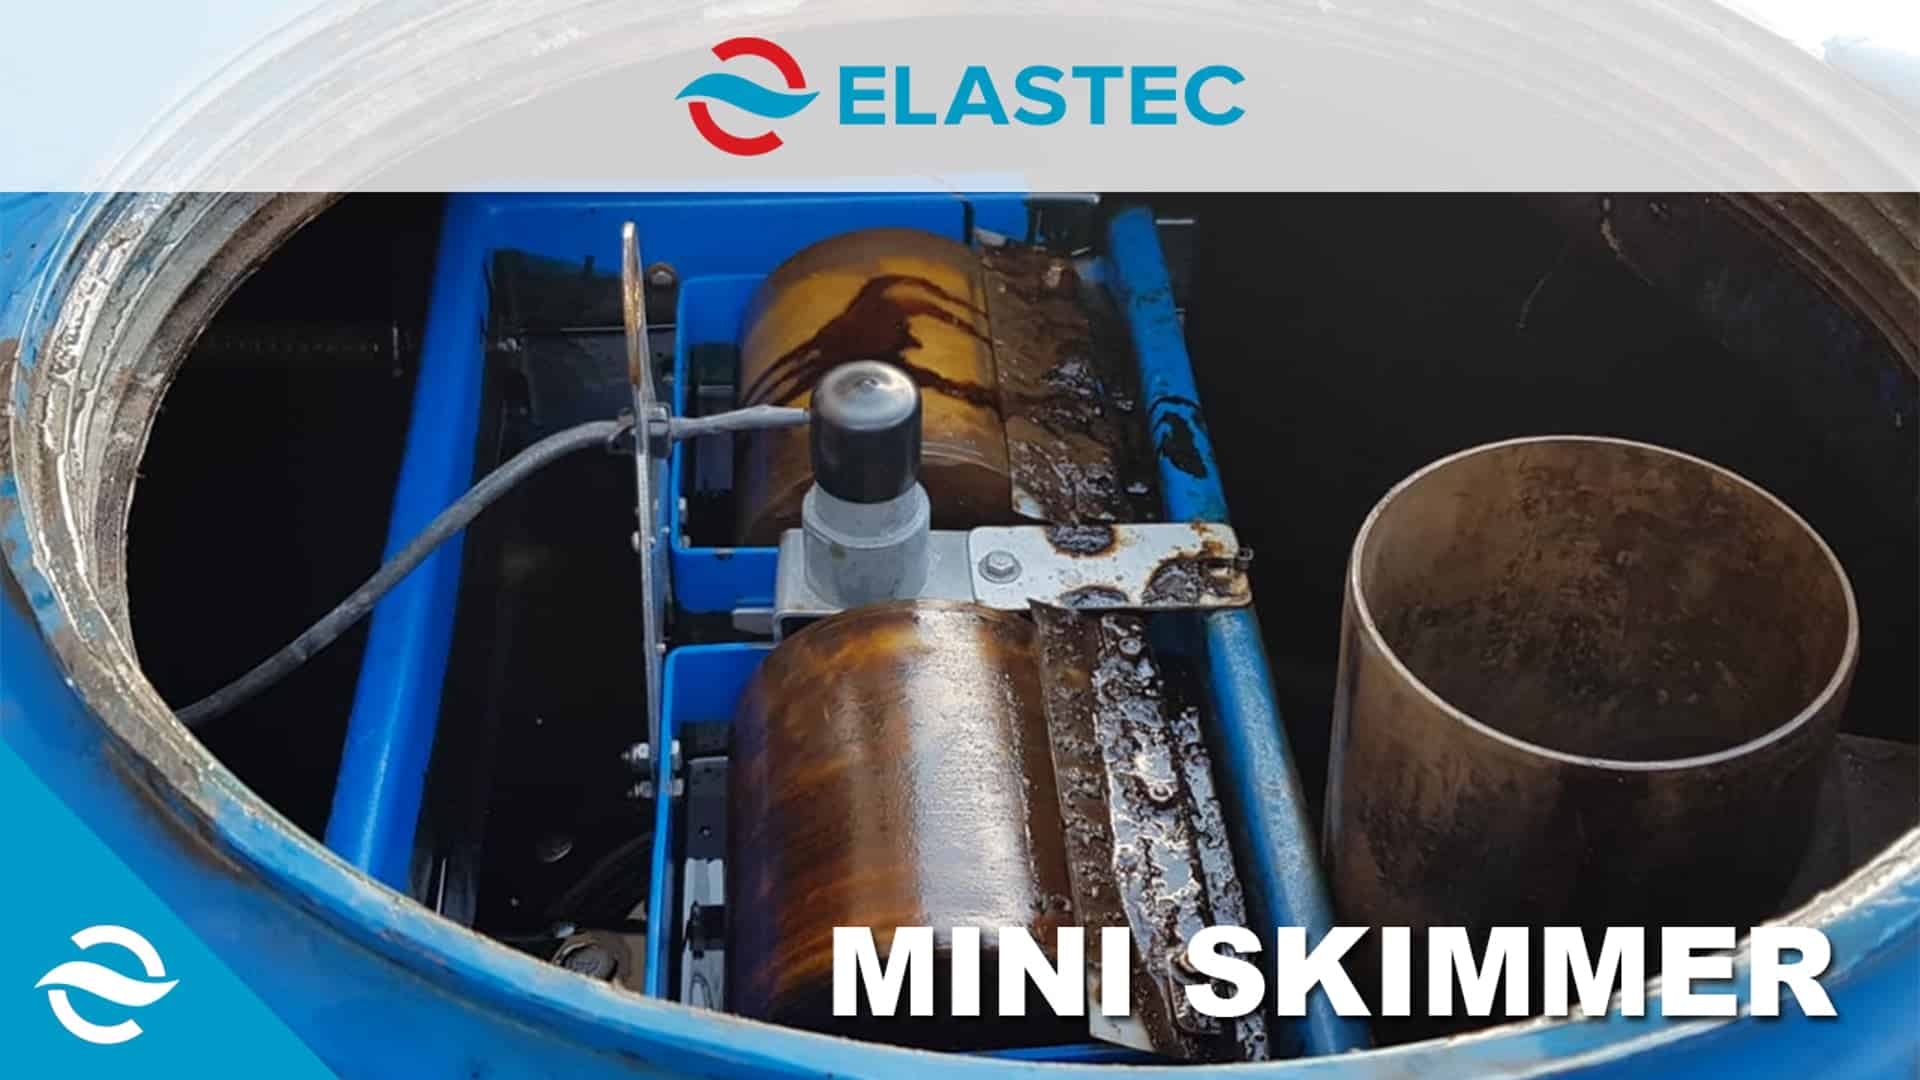 Elastec Mini Skimmer Informational Video